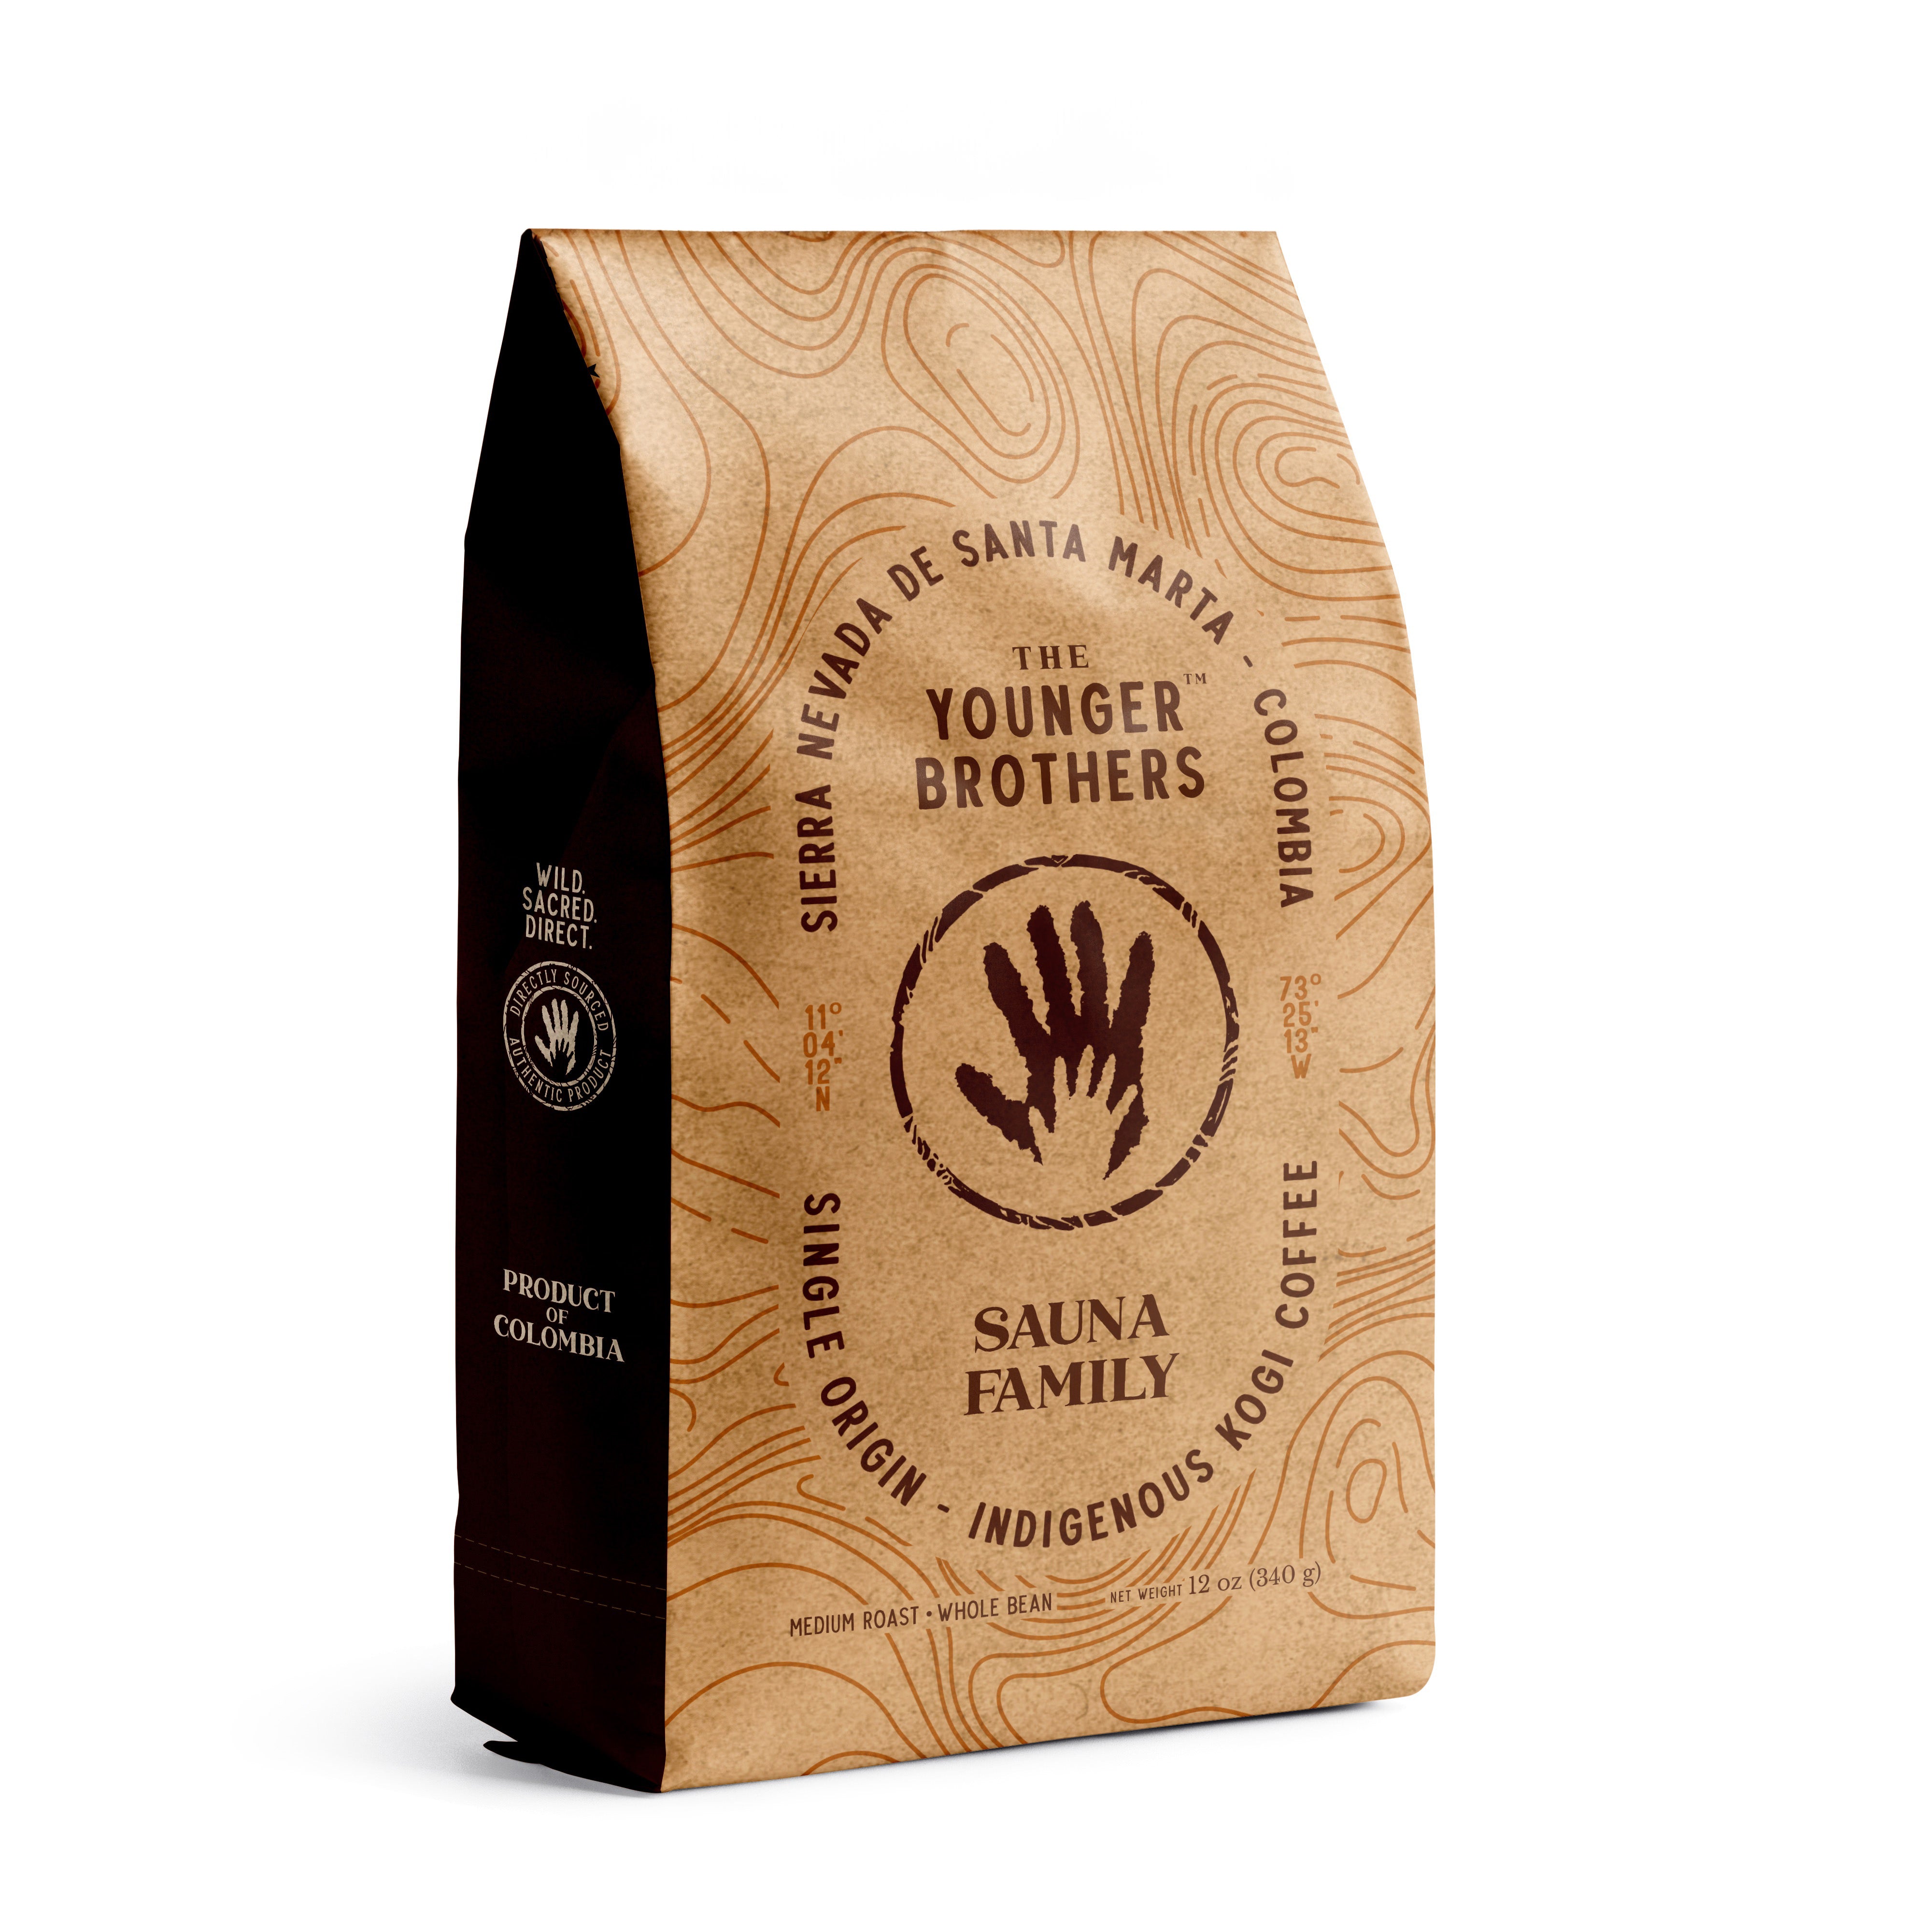 The Younger Brothers Kogi Coffee -Sauna Family- 12 oz bag